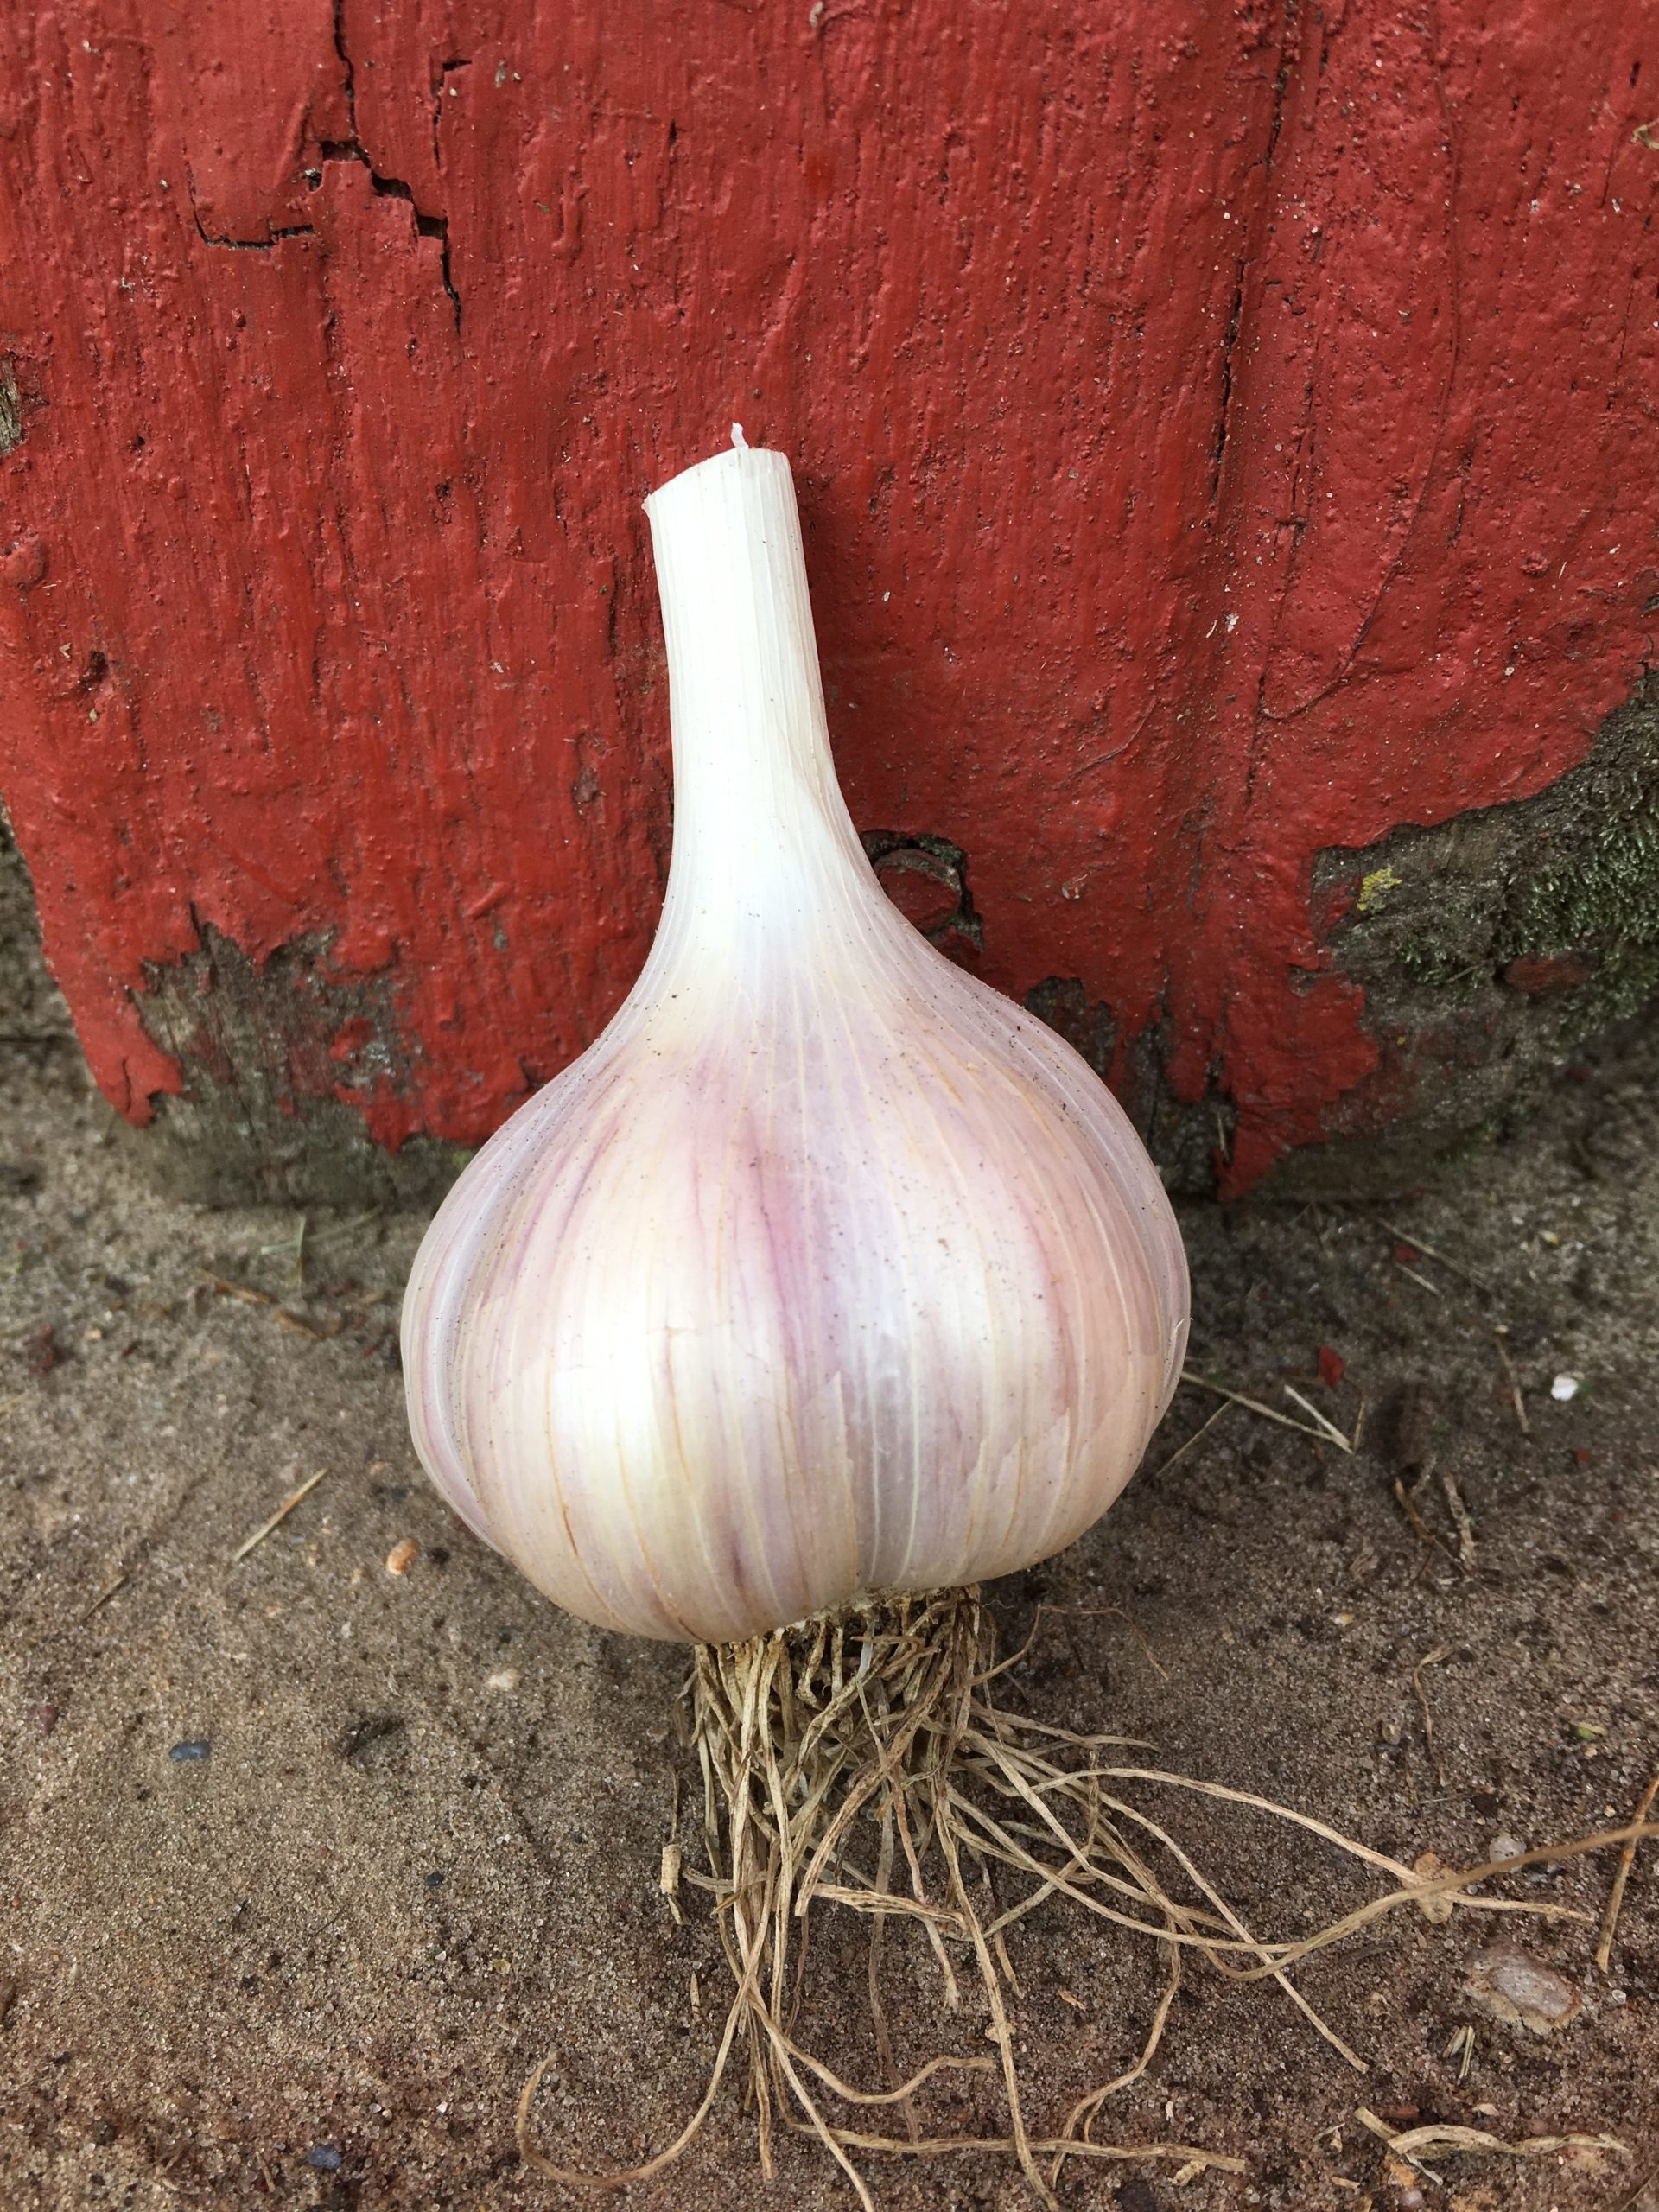 Armenian Garlic Seeds